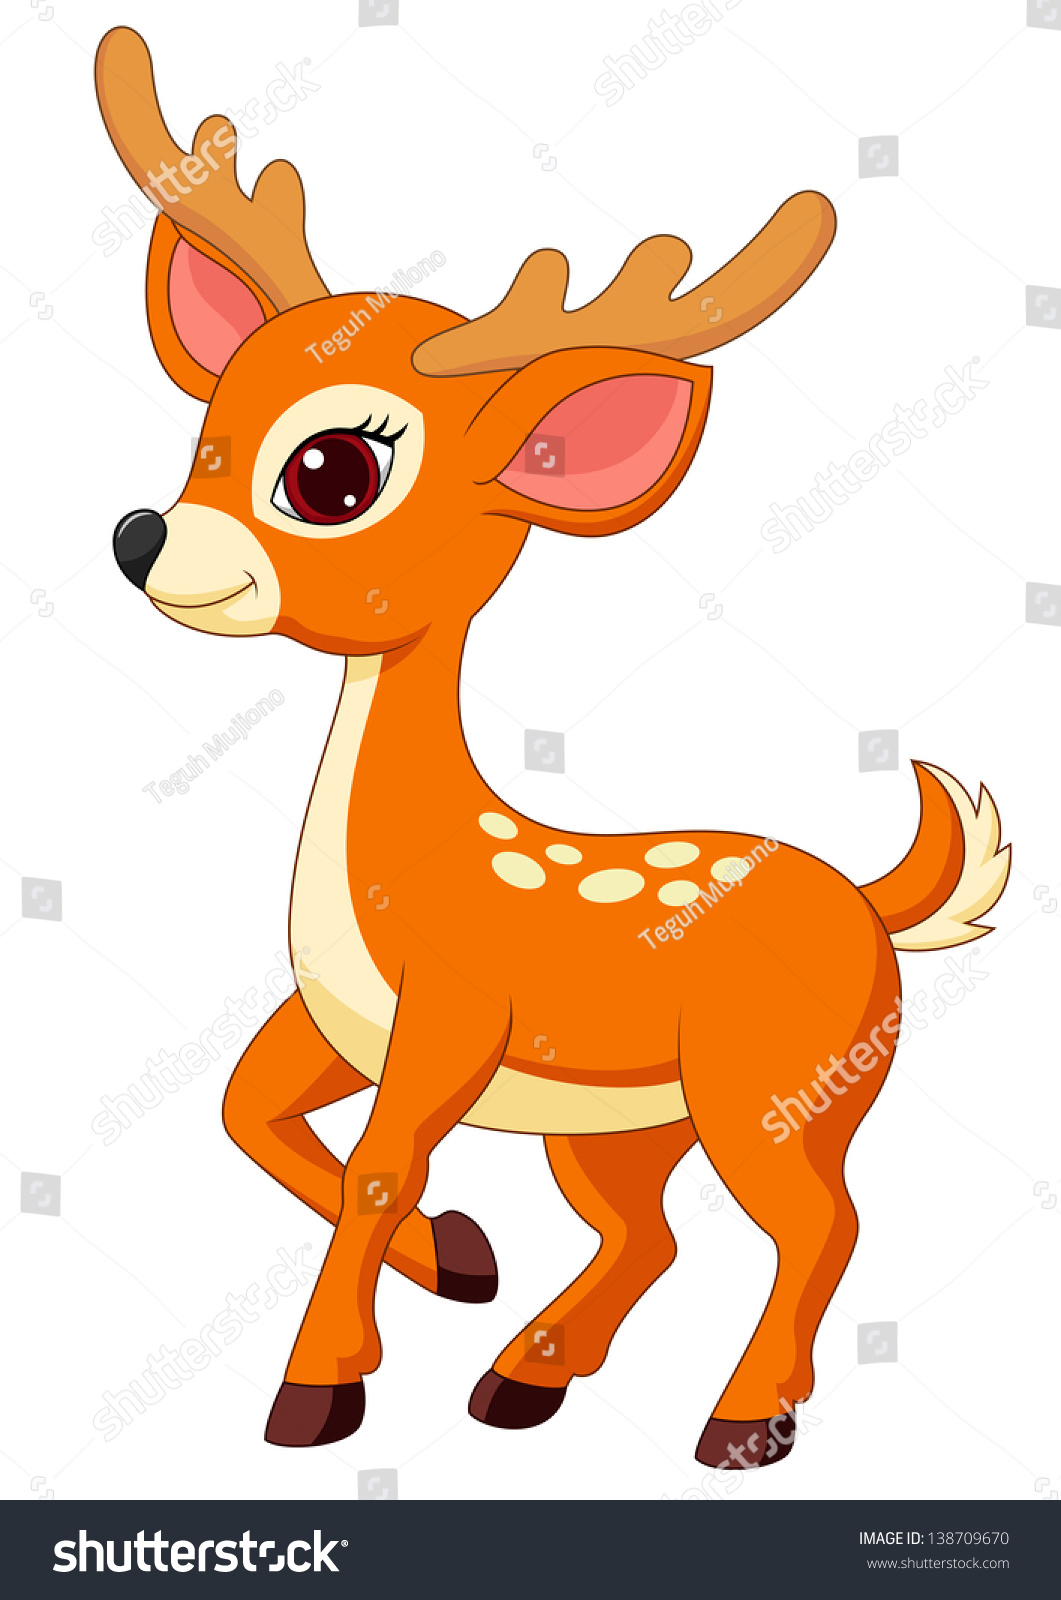 Cute Deer Cartoon Stock Vector 138709670 - Shutterstock